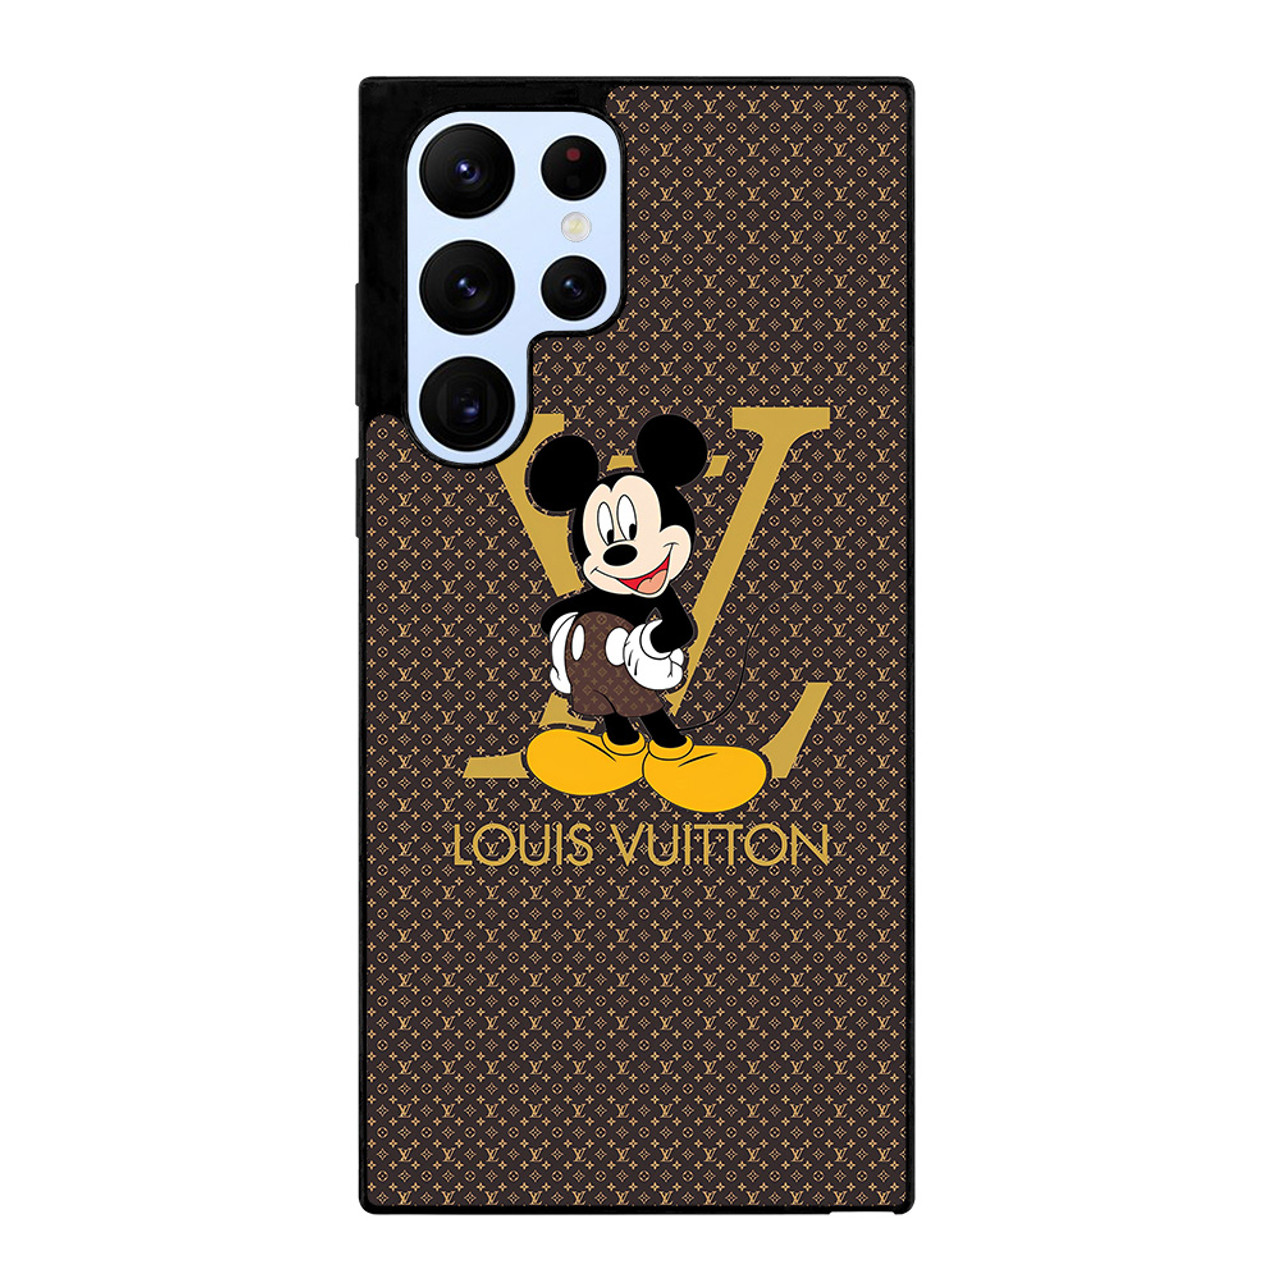 Louis Vuitton Case Samsung S22 